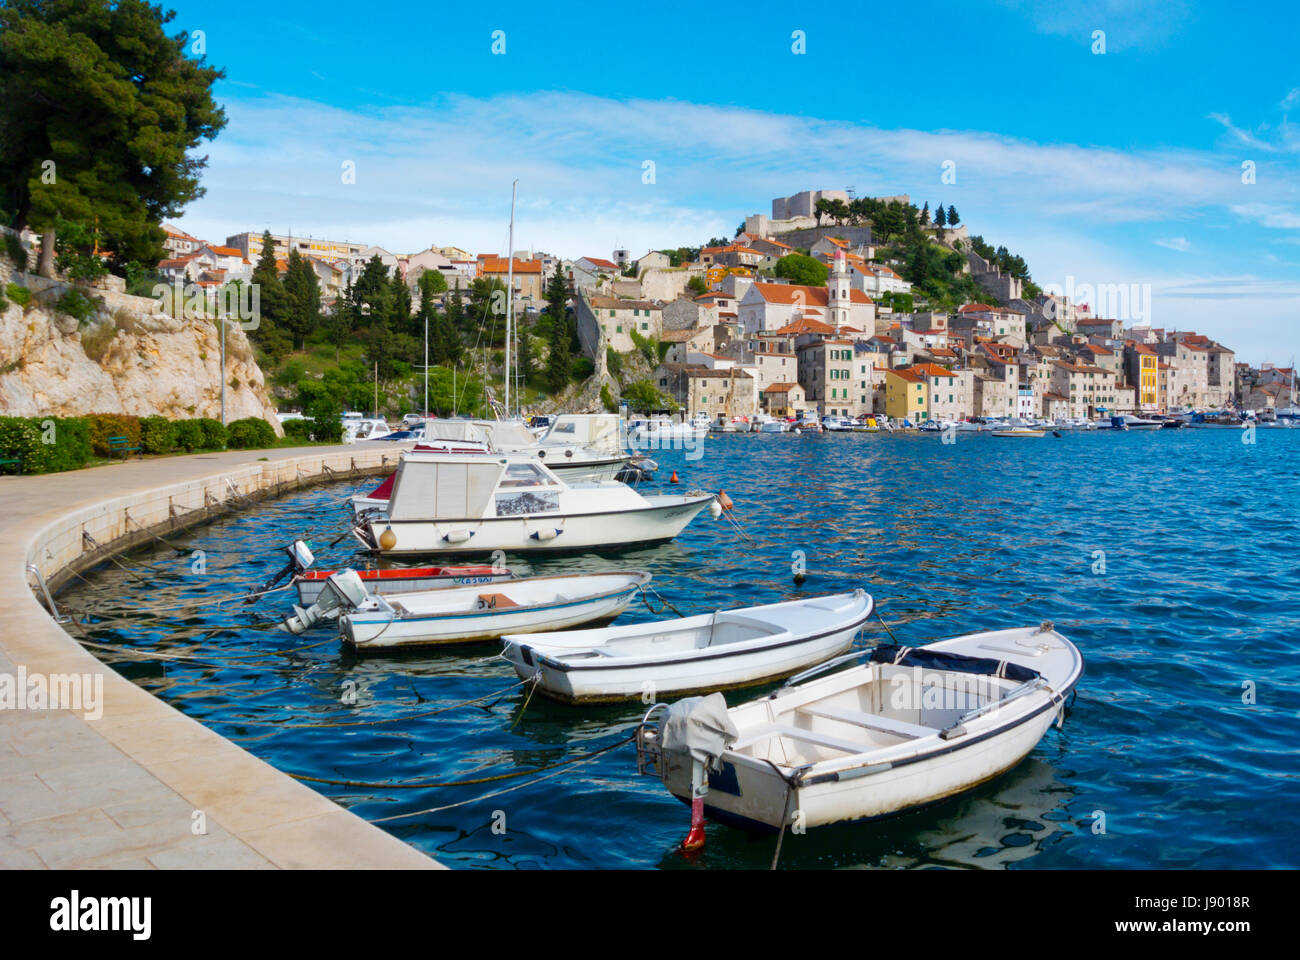 Boats on seaside promenade, with old town in background, Sibenik, Dalmatia, Croatia Stock Photo